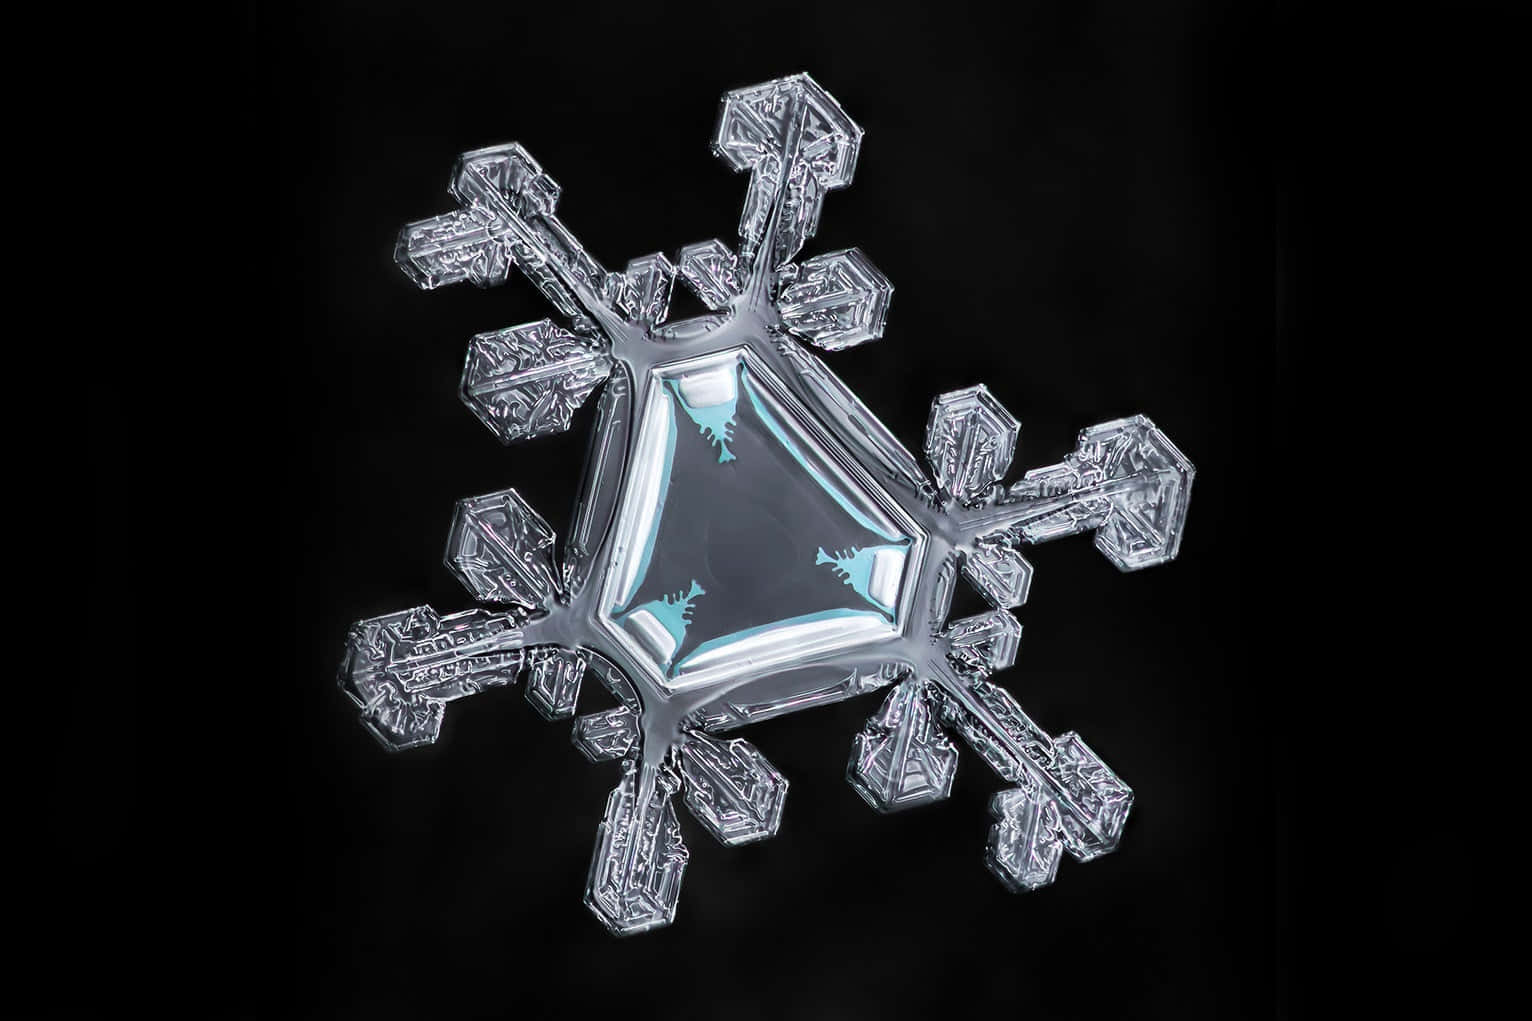 Nature's Beauty - A Close-up Look at a Snowflake